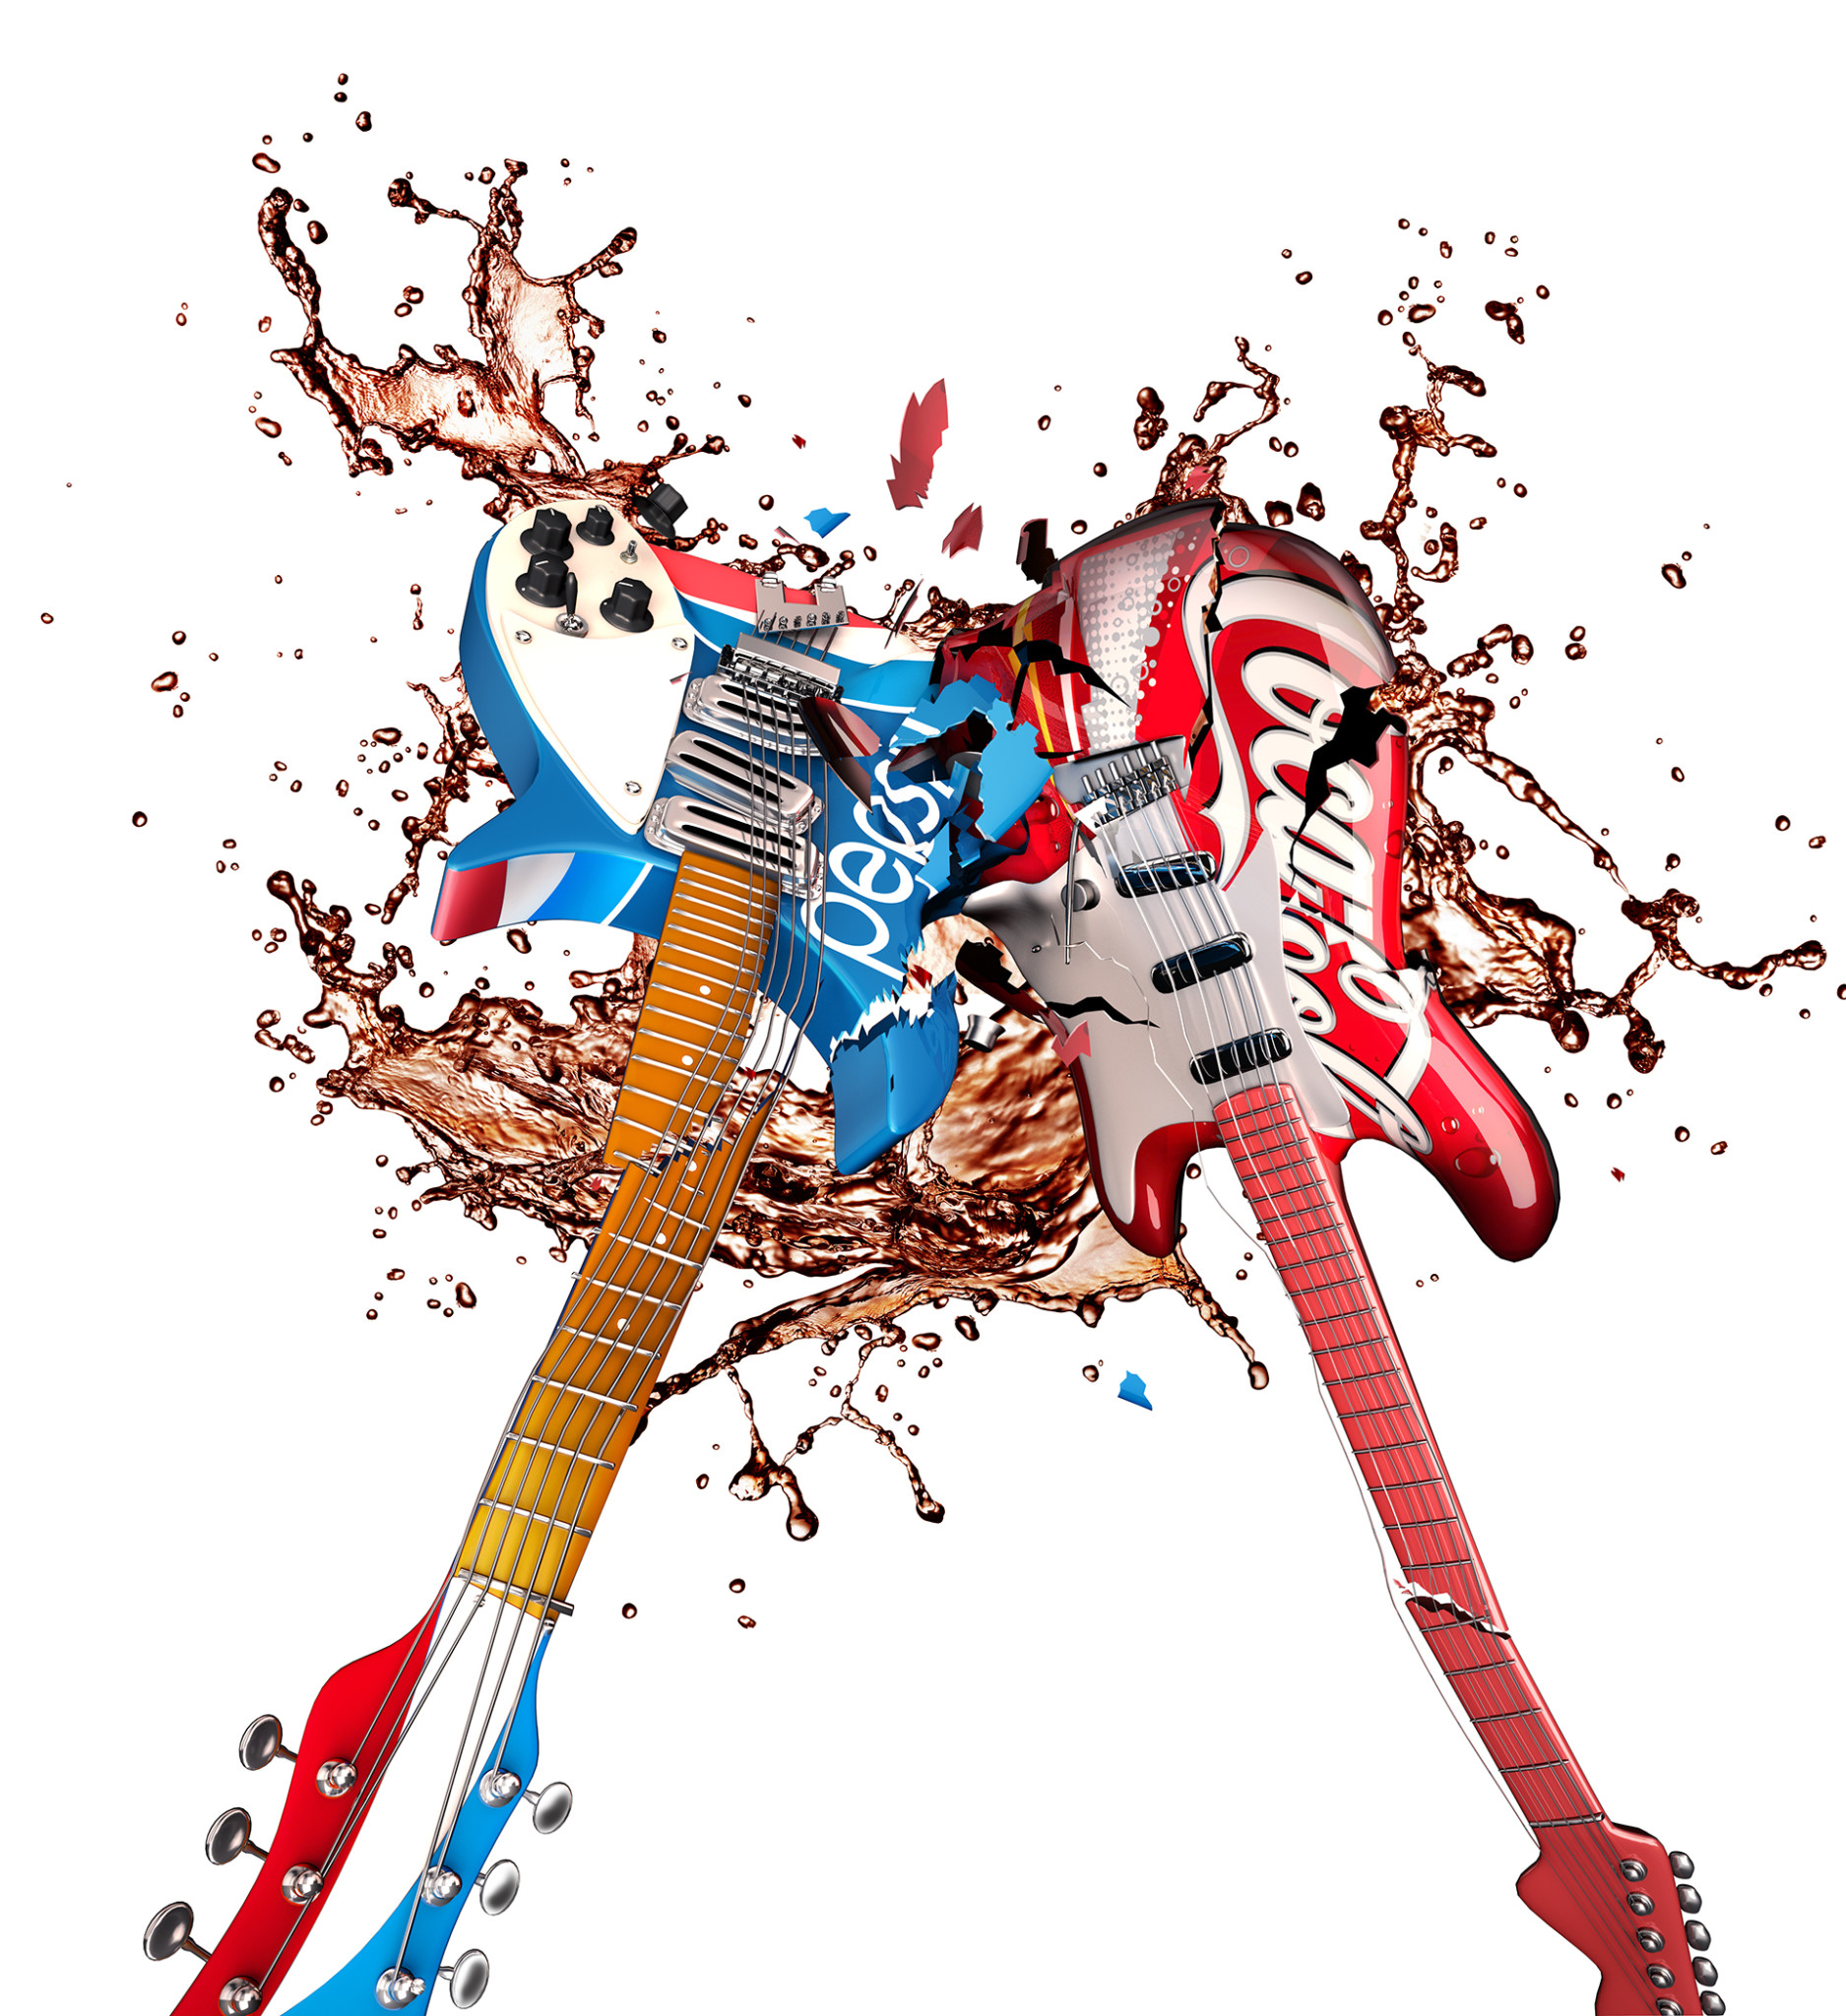 3D liquid fluid of smashing electric guitars